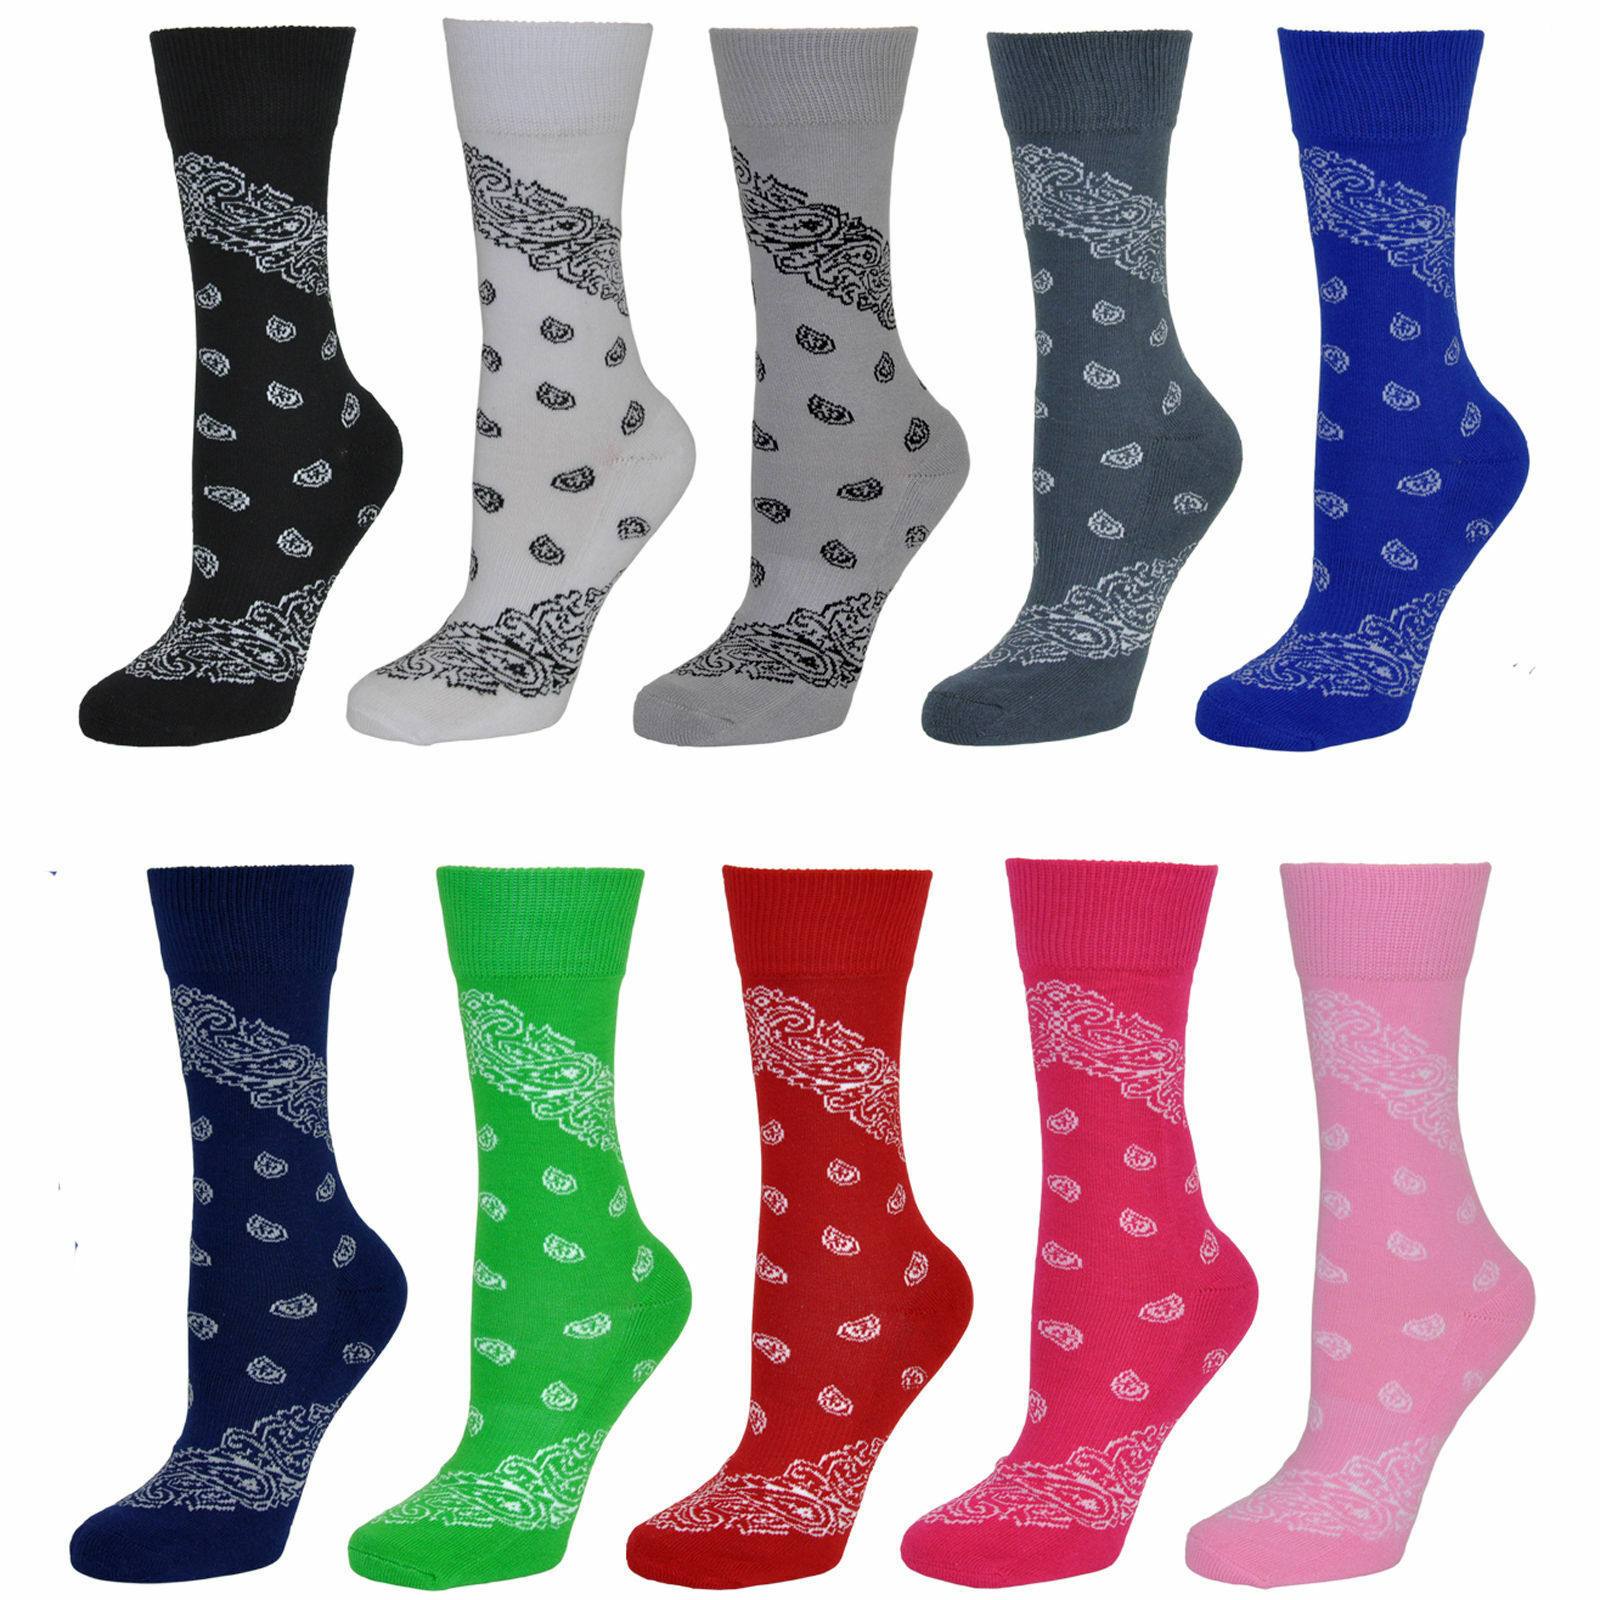 Bandana Casual Cotton Crew Socks with 10 Colors